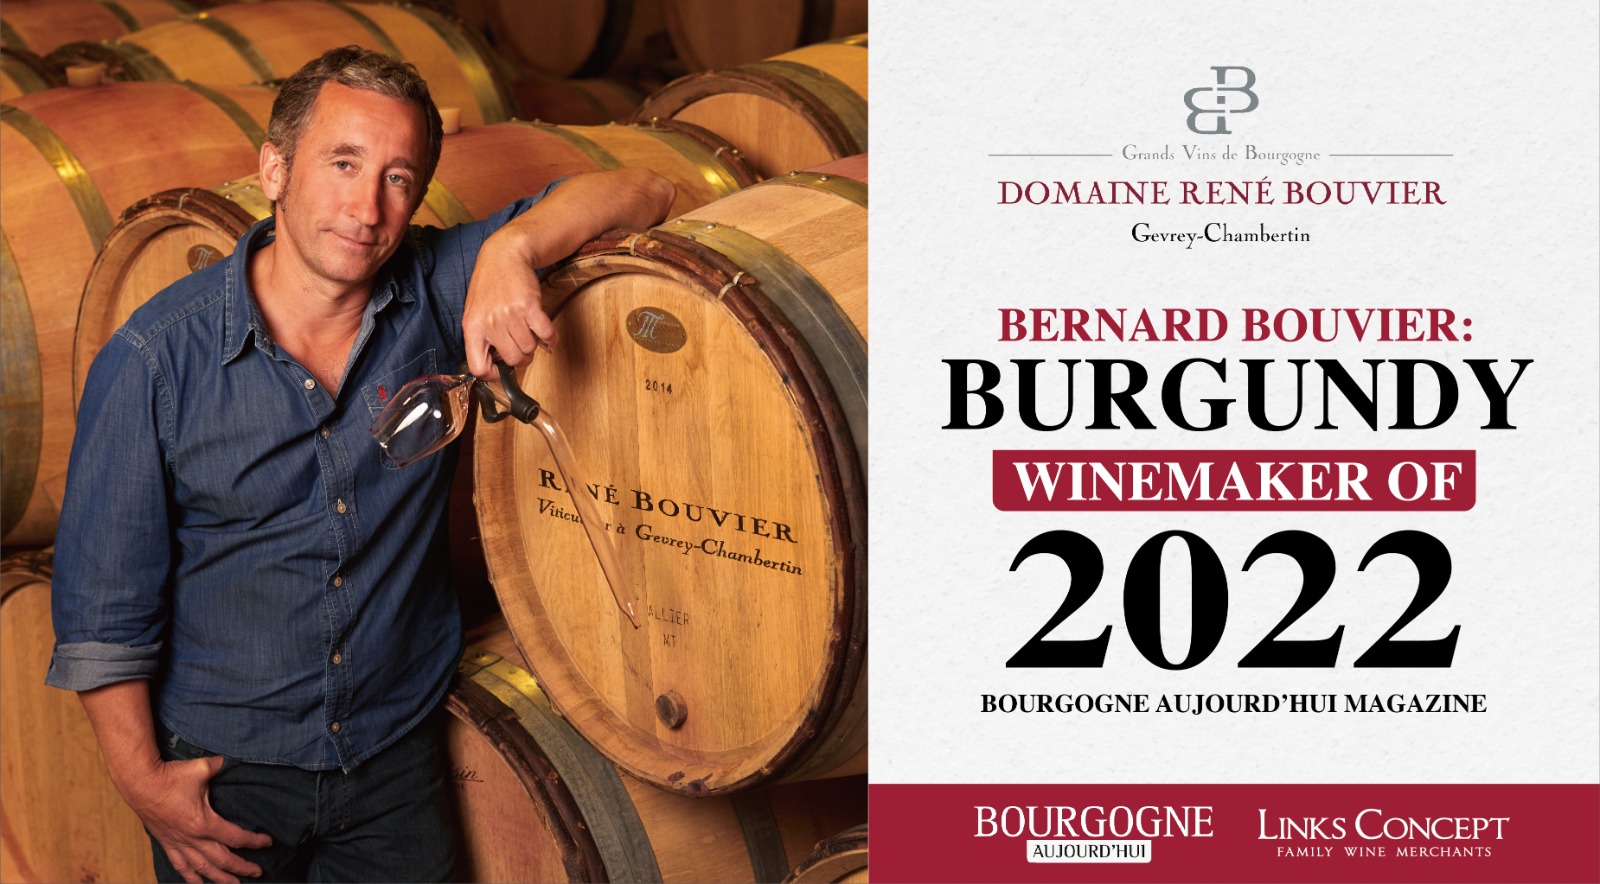 Congratulations to Mr. Bernard Bouvier on being awarded the prestigious title of Burgundy Winemaker of 2022 by Bourgogne Aujourd'hui Magazine.